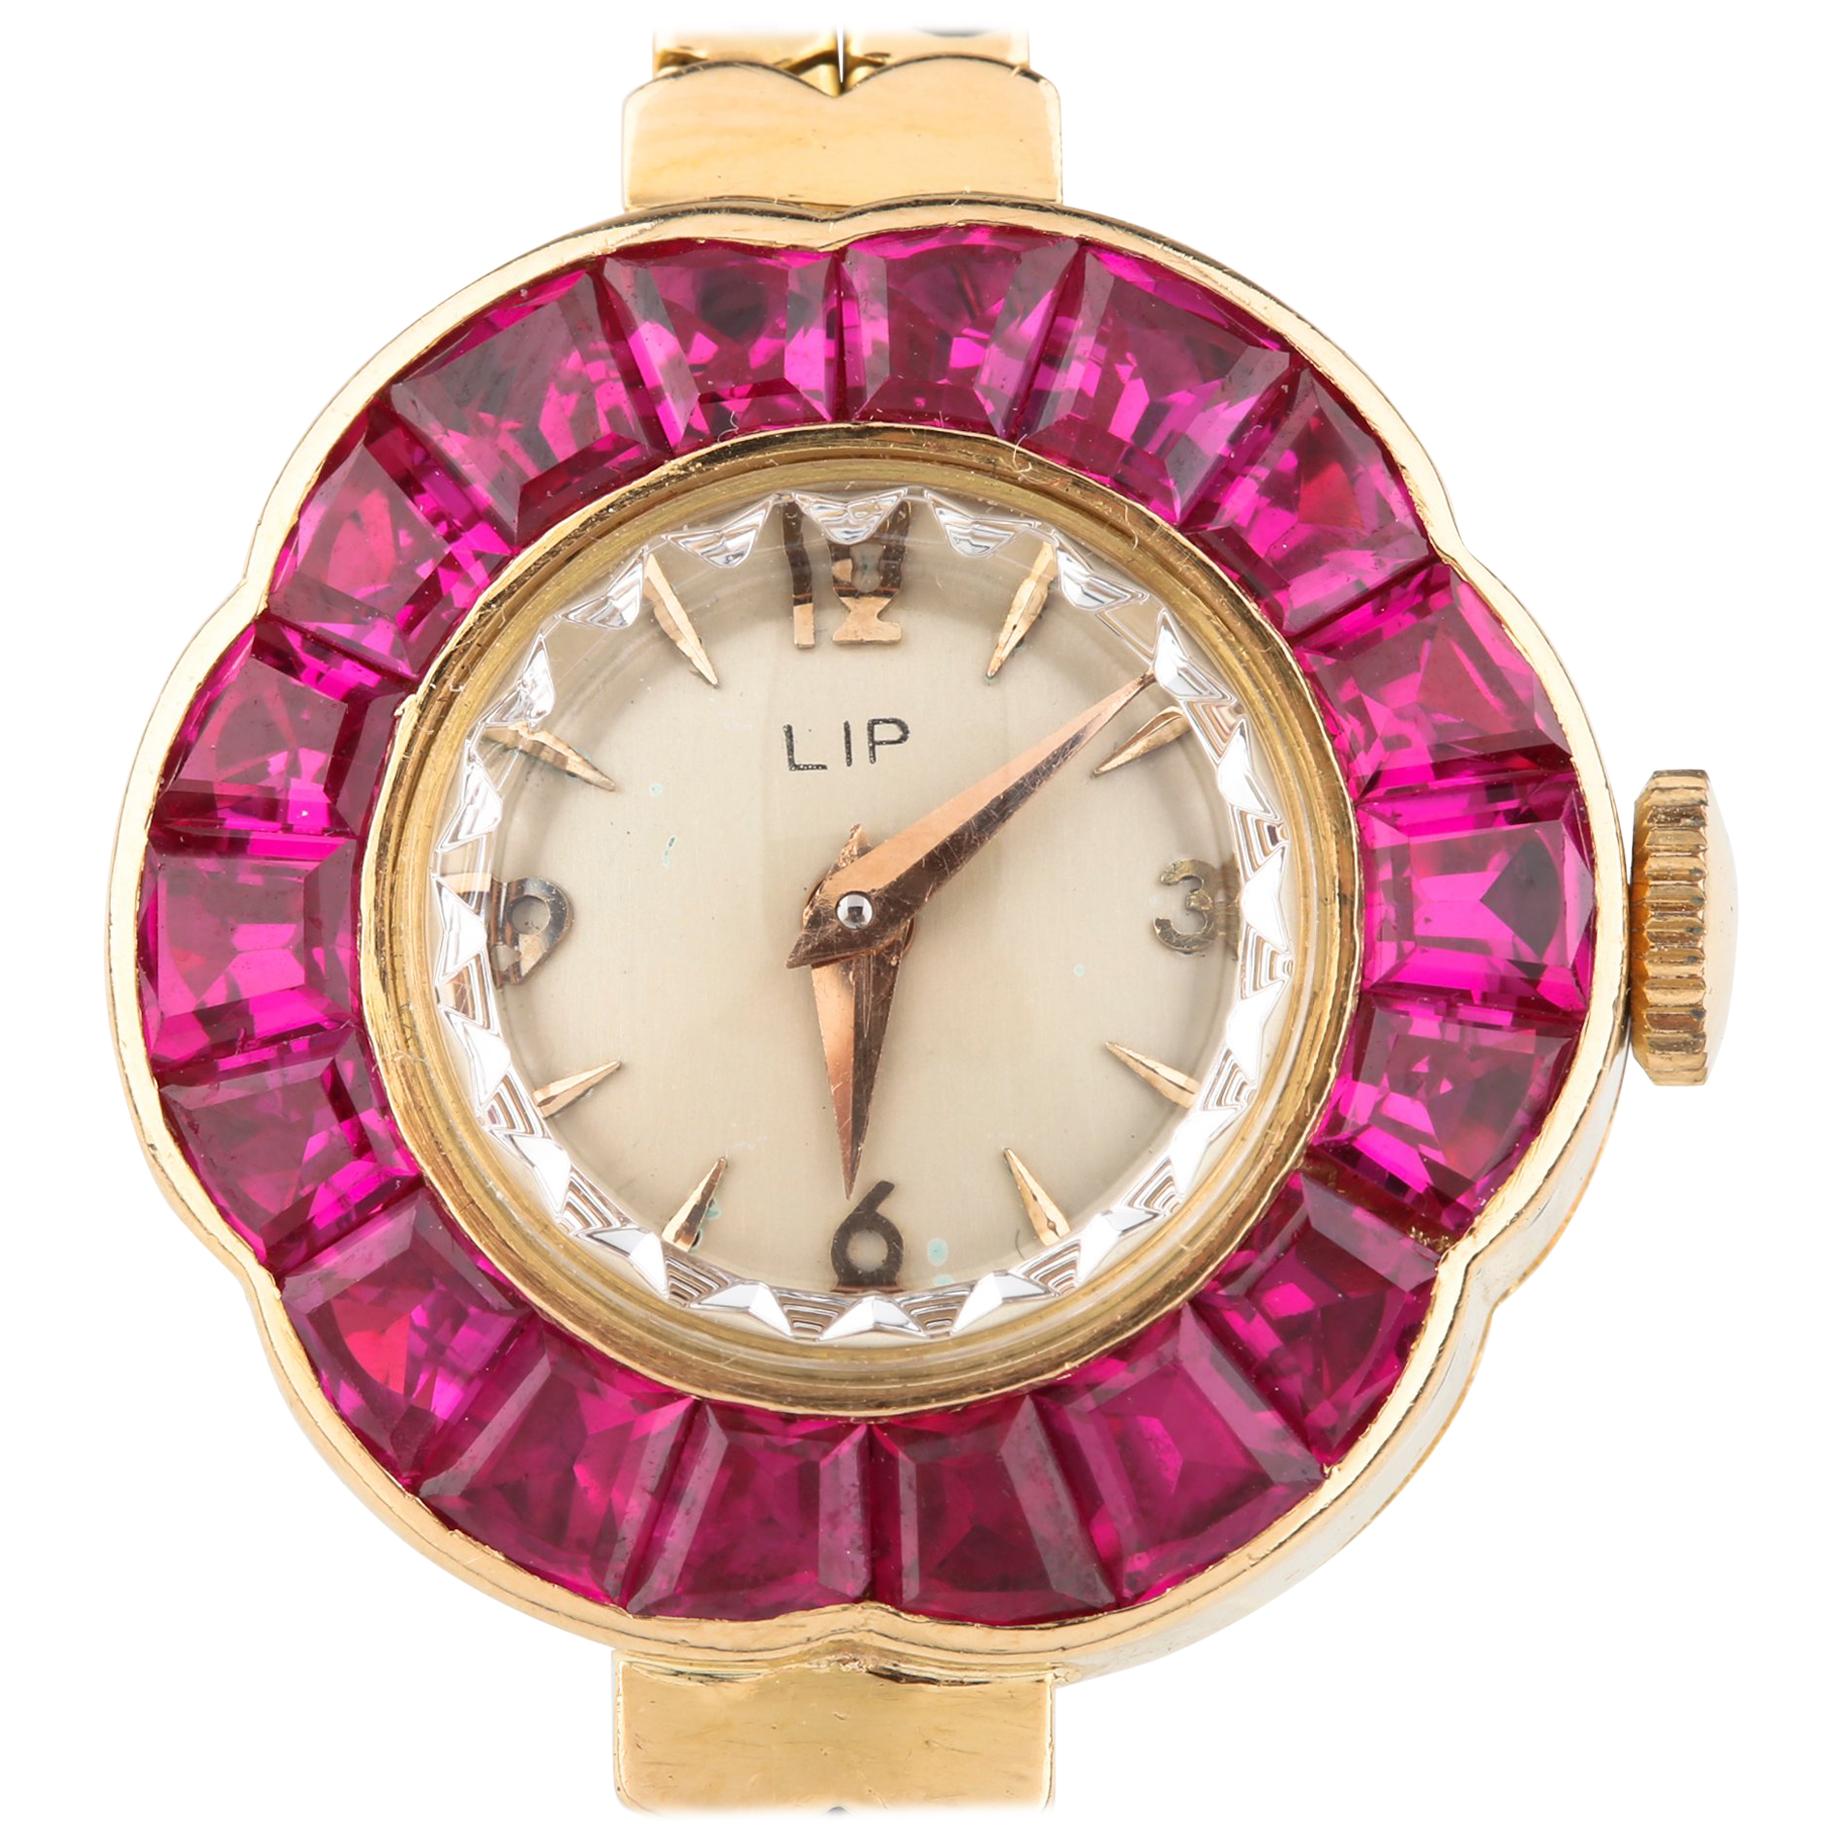 LIP Ruby Bezel Hand-Winding 18 Karat Yellow Gold Women's Watch with Gold Band